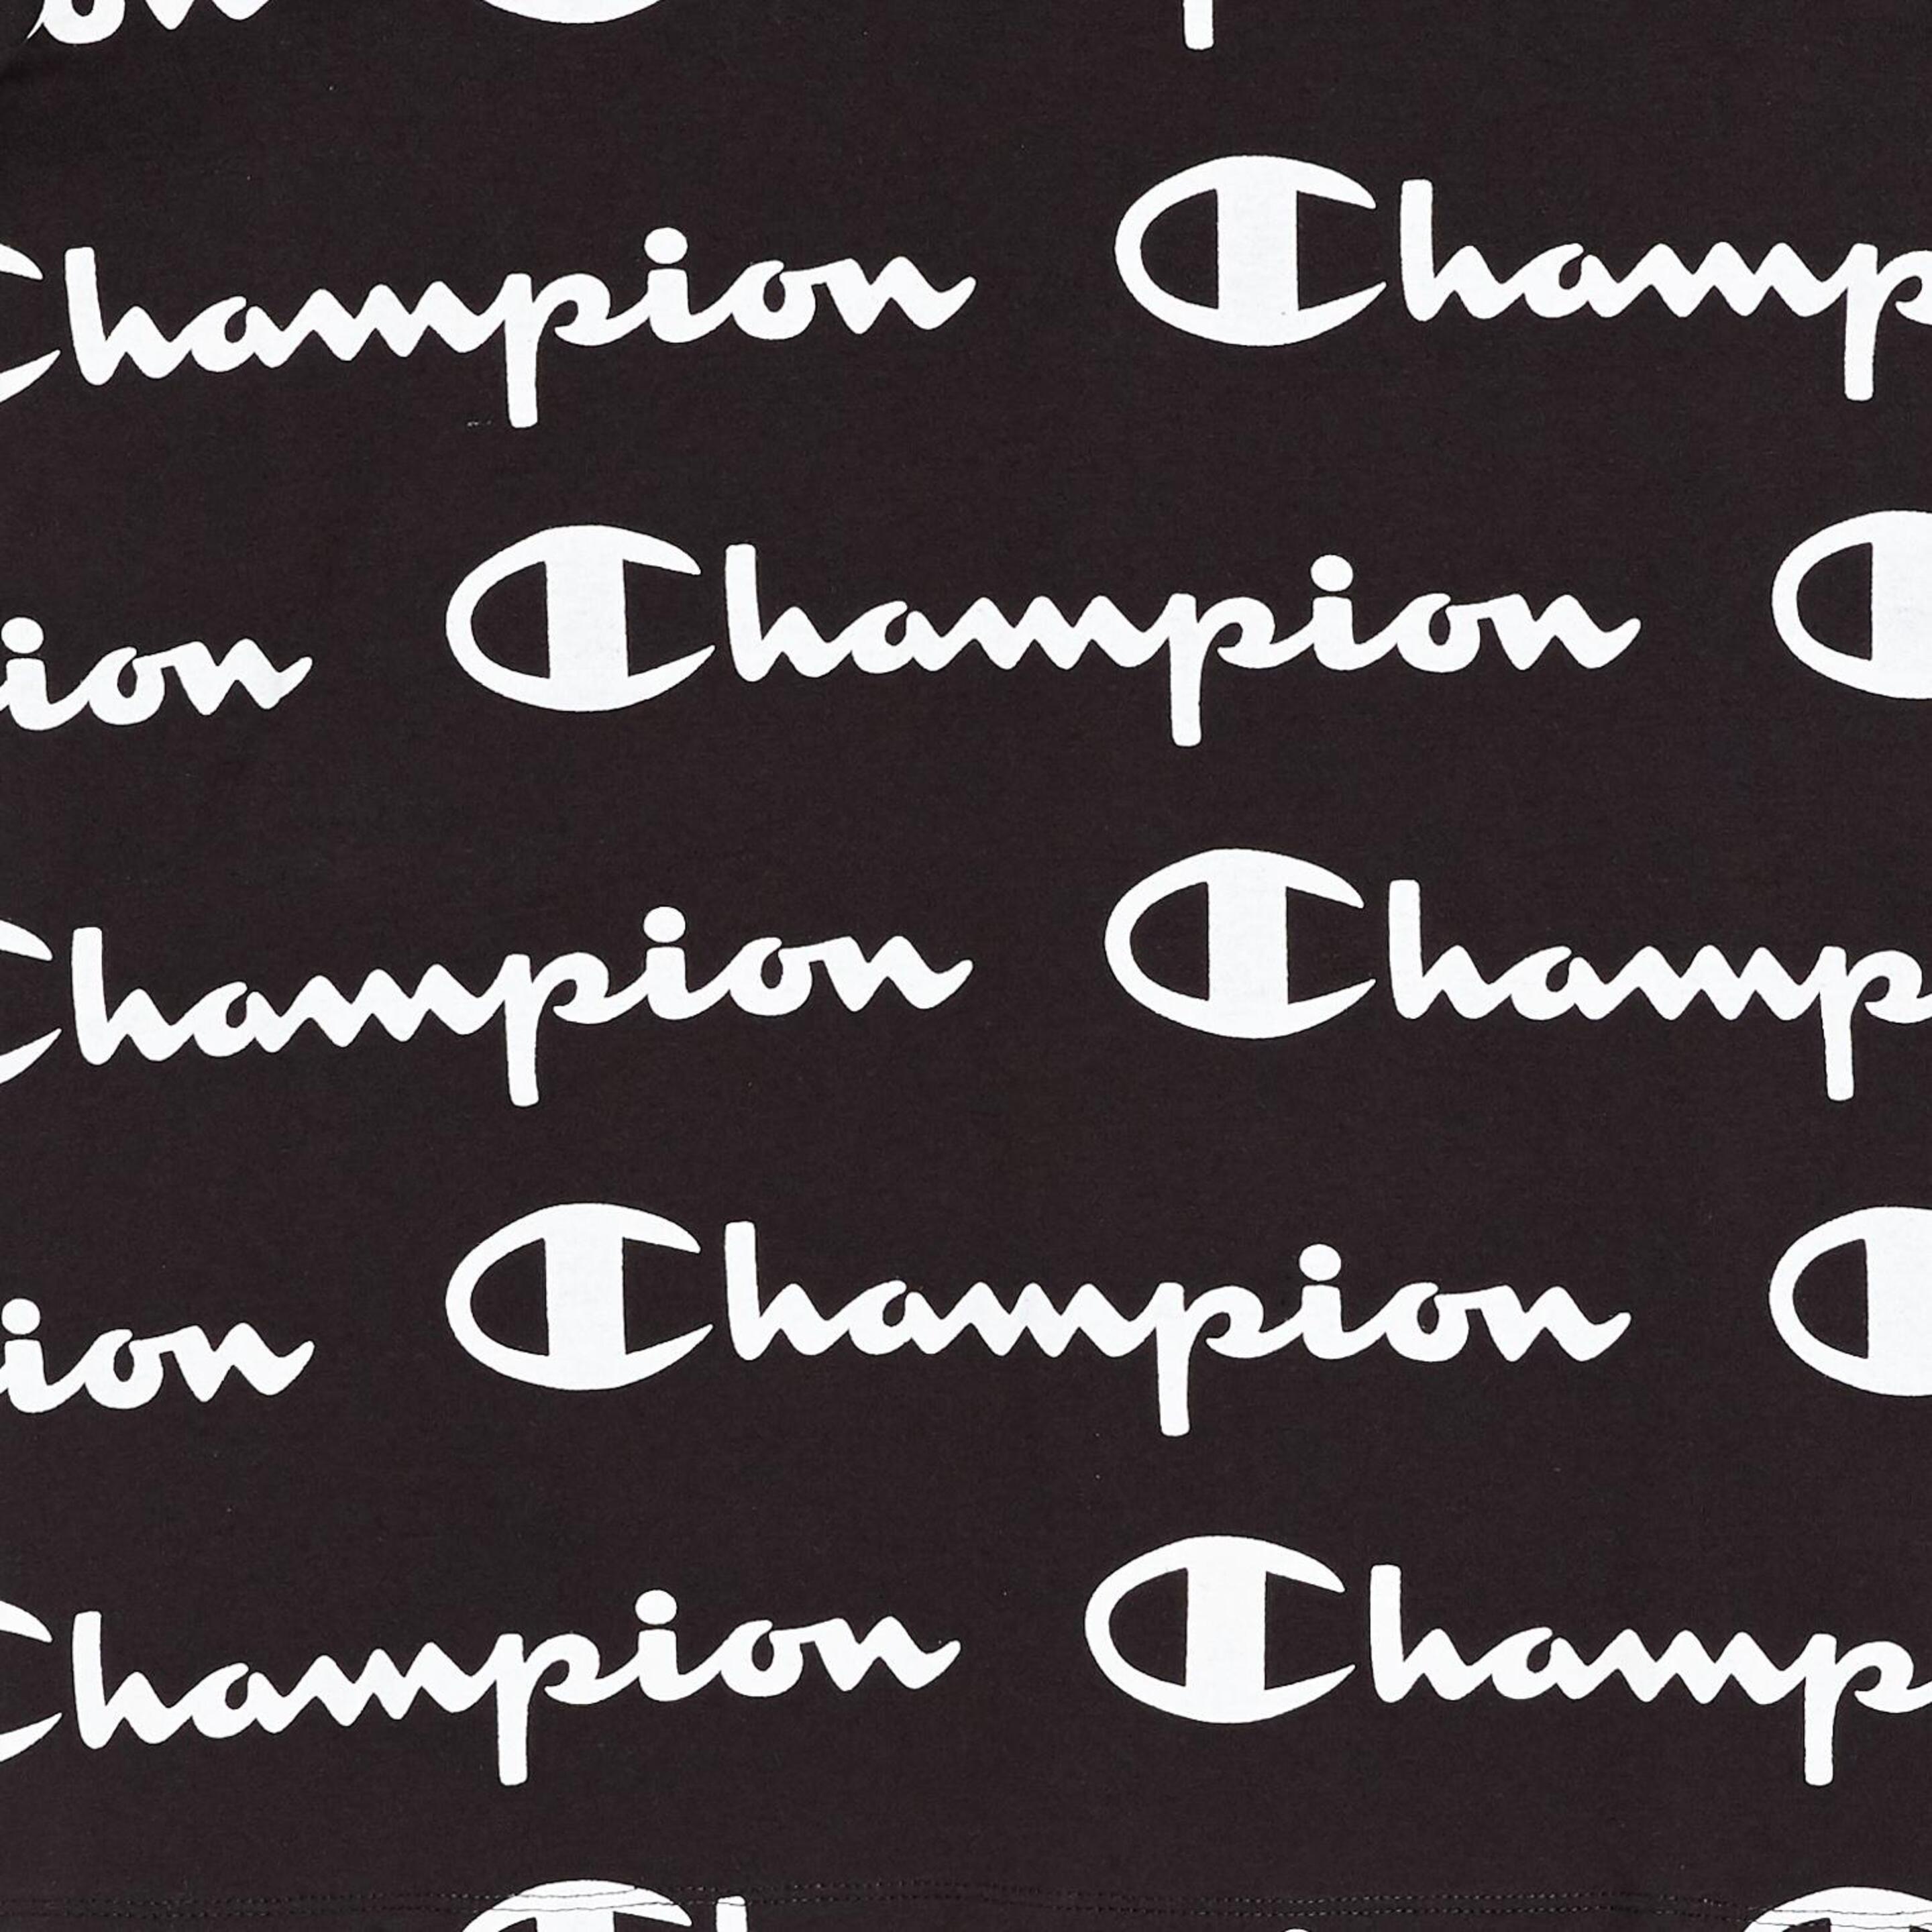 T-shirt Champion Multilogo